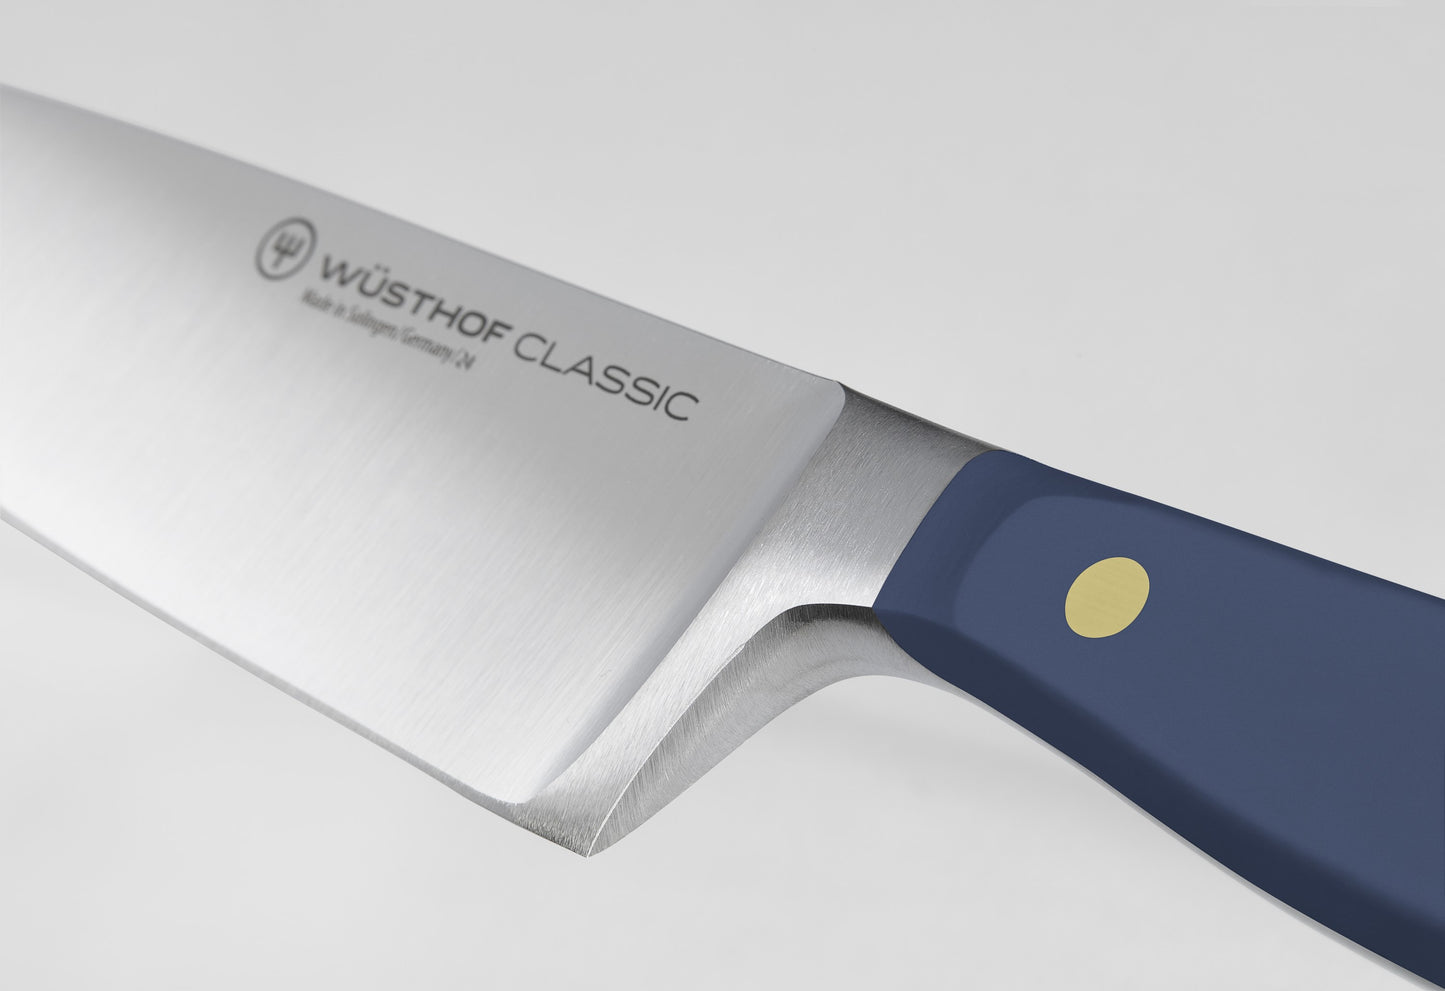 Classic 2-piece Starter Knife Set